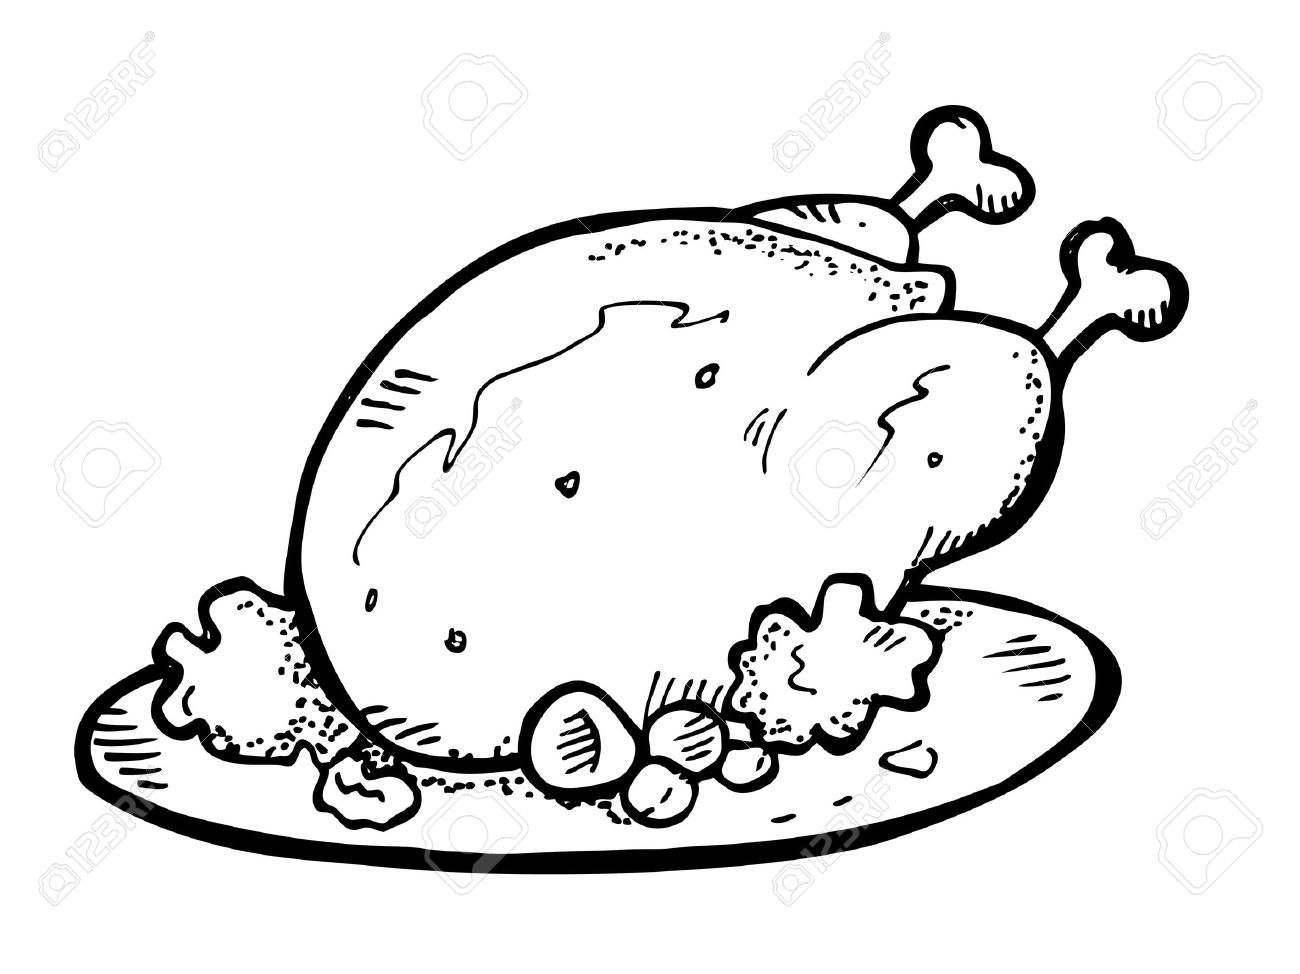 fatty food: chicken leg doodle